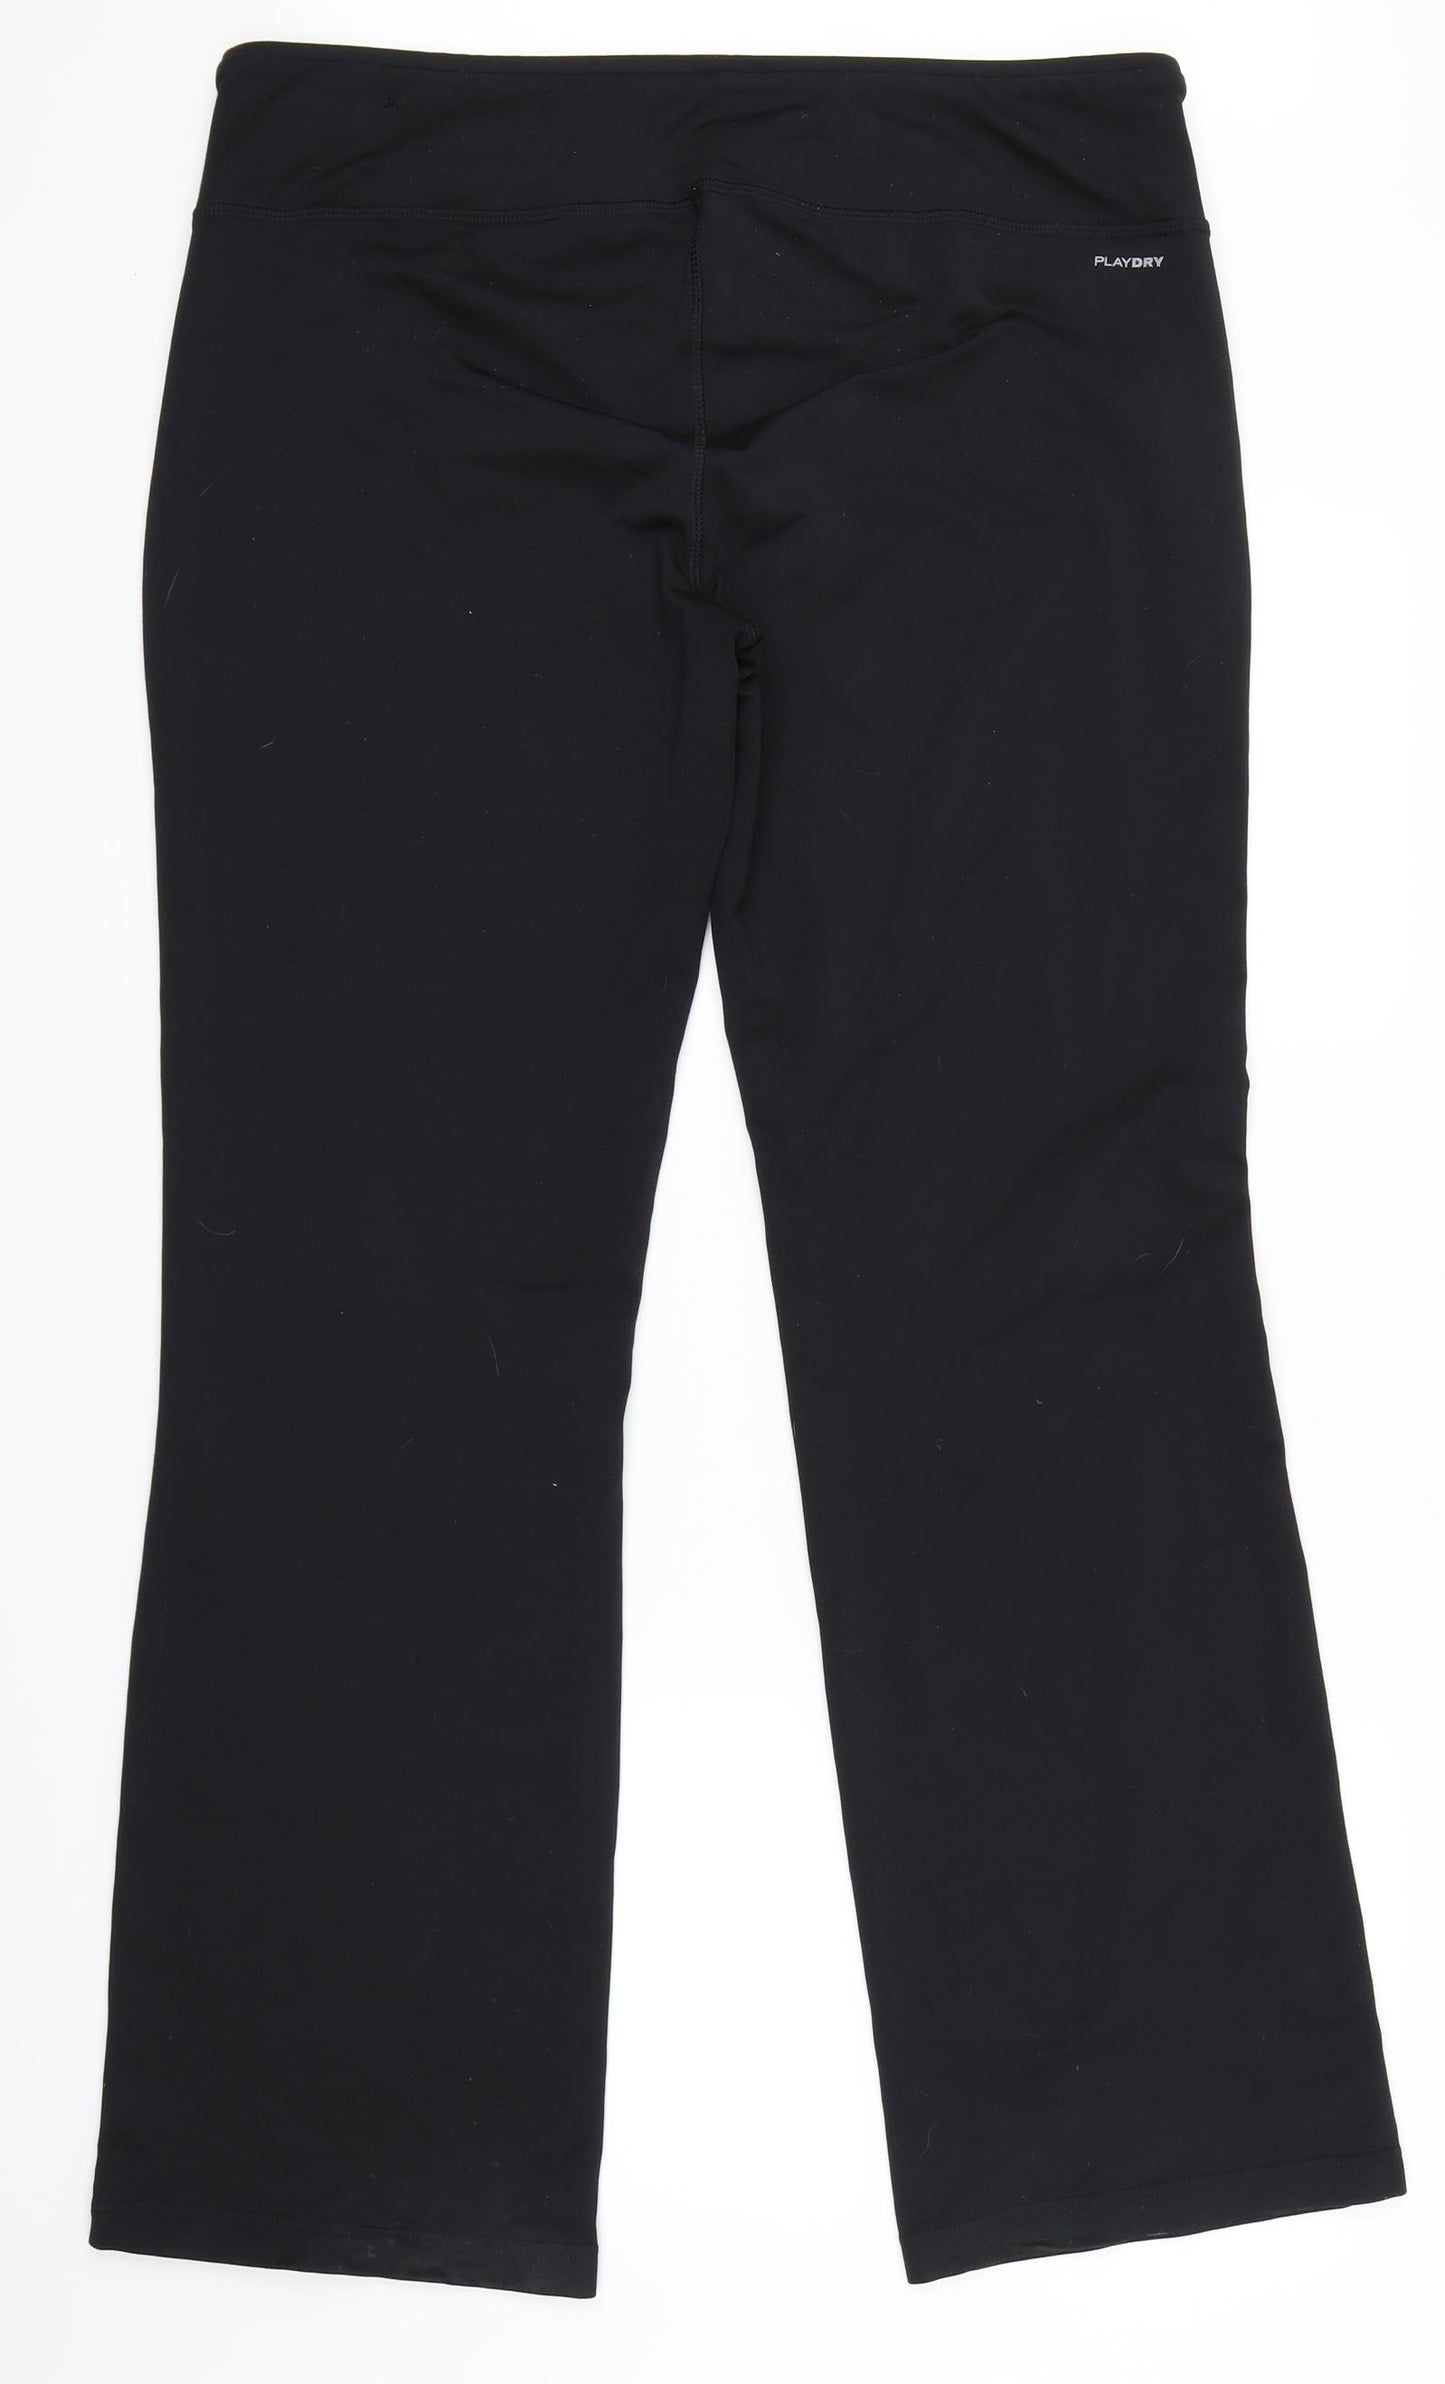 Reebok Womens Black   Compression Trousers Size XL L31 in